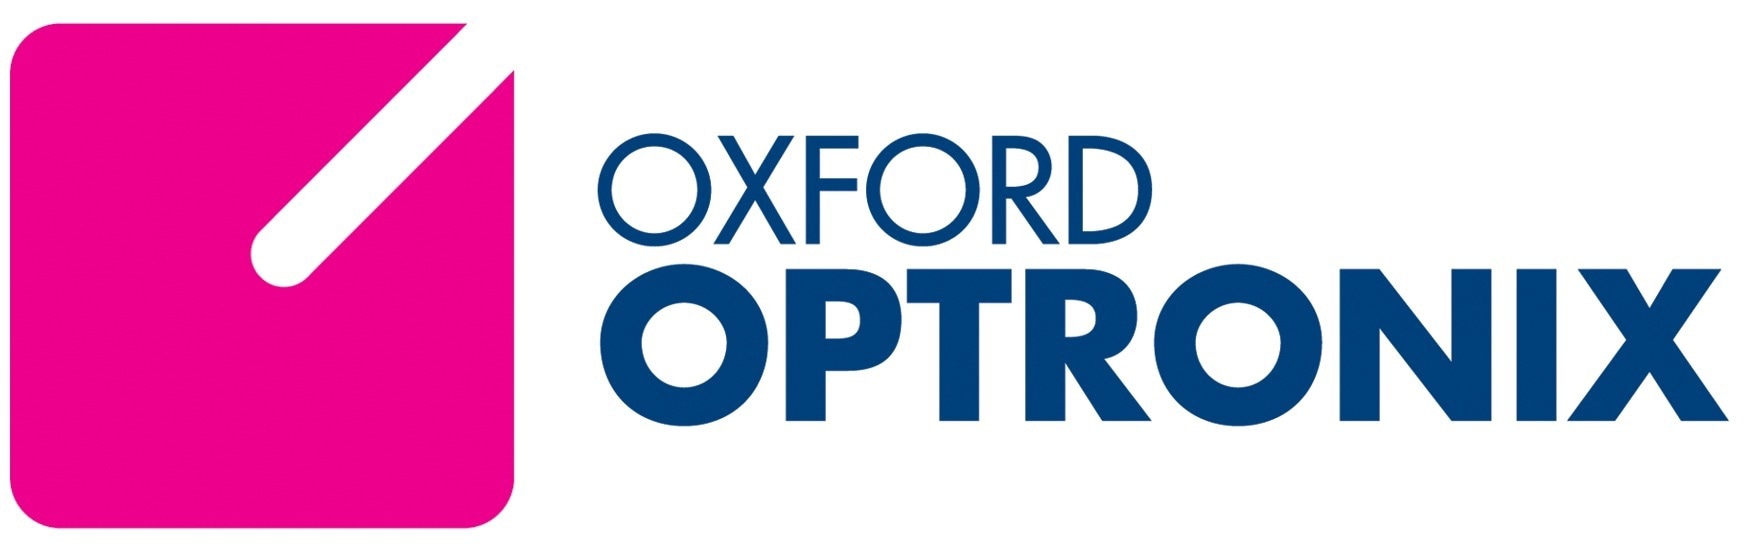 Oxford Optronix Ltd. logo.